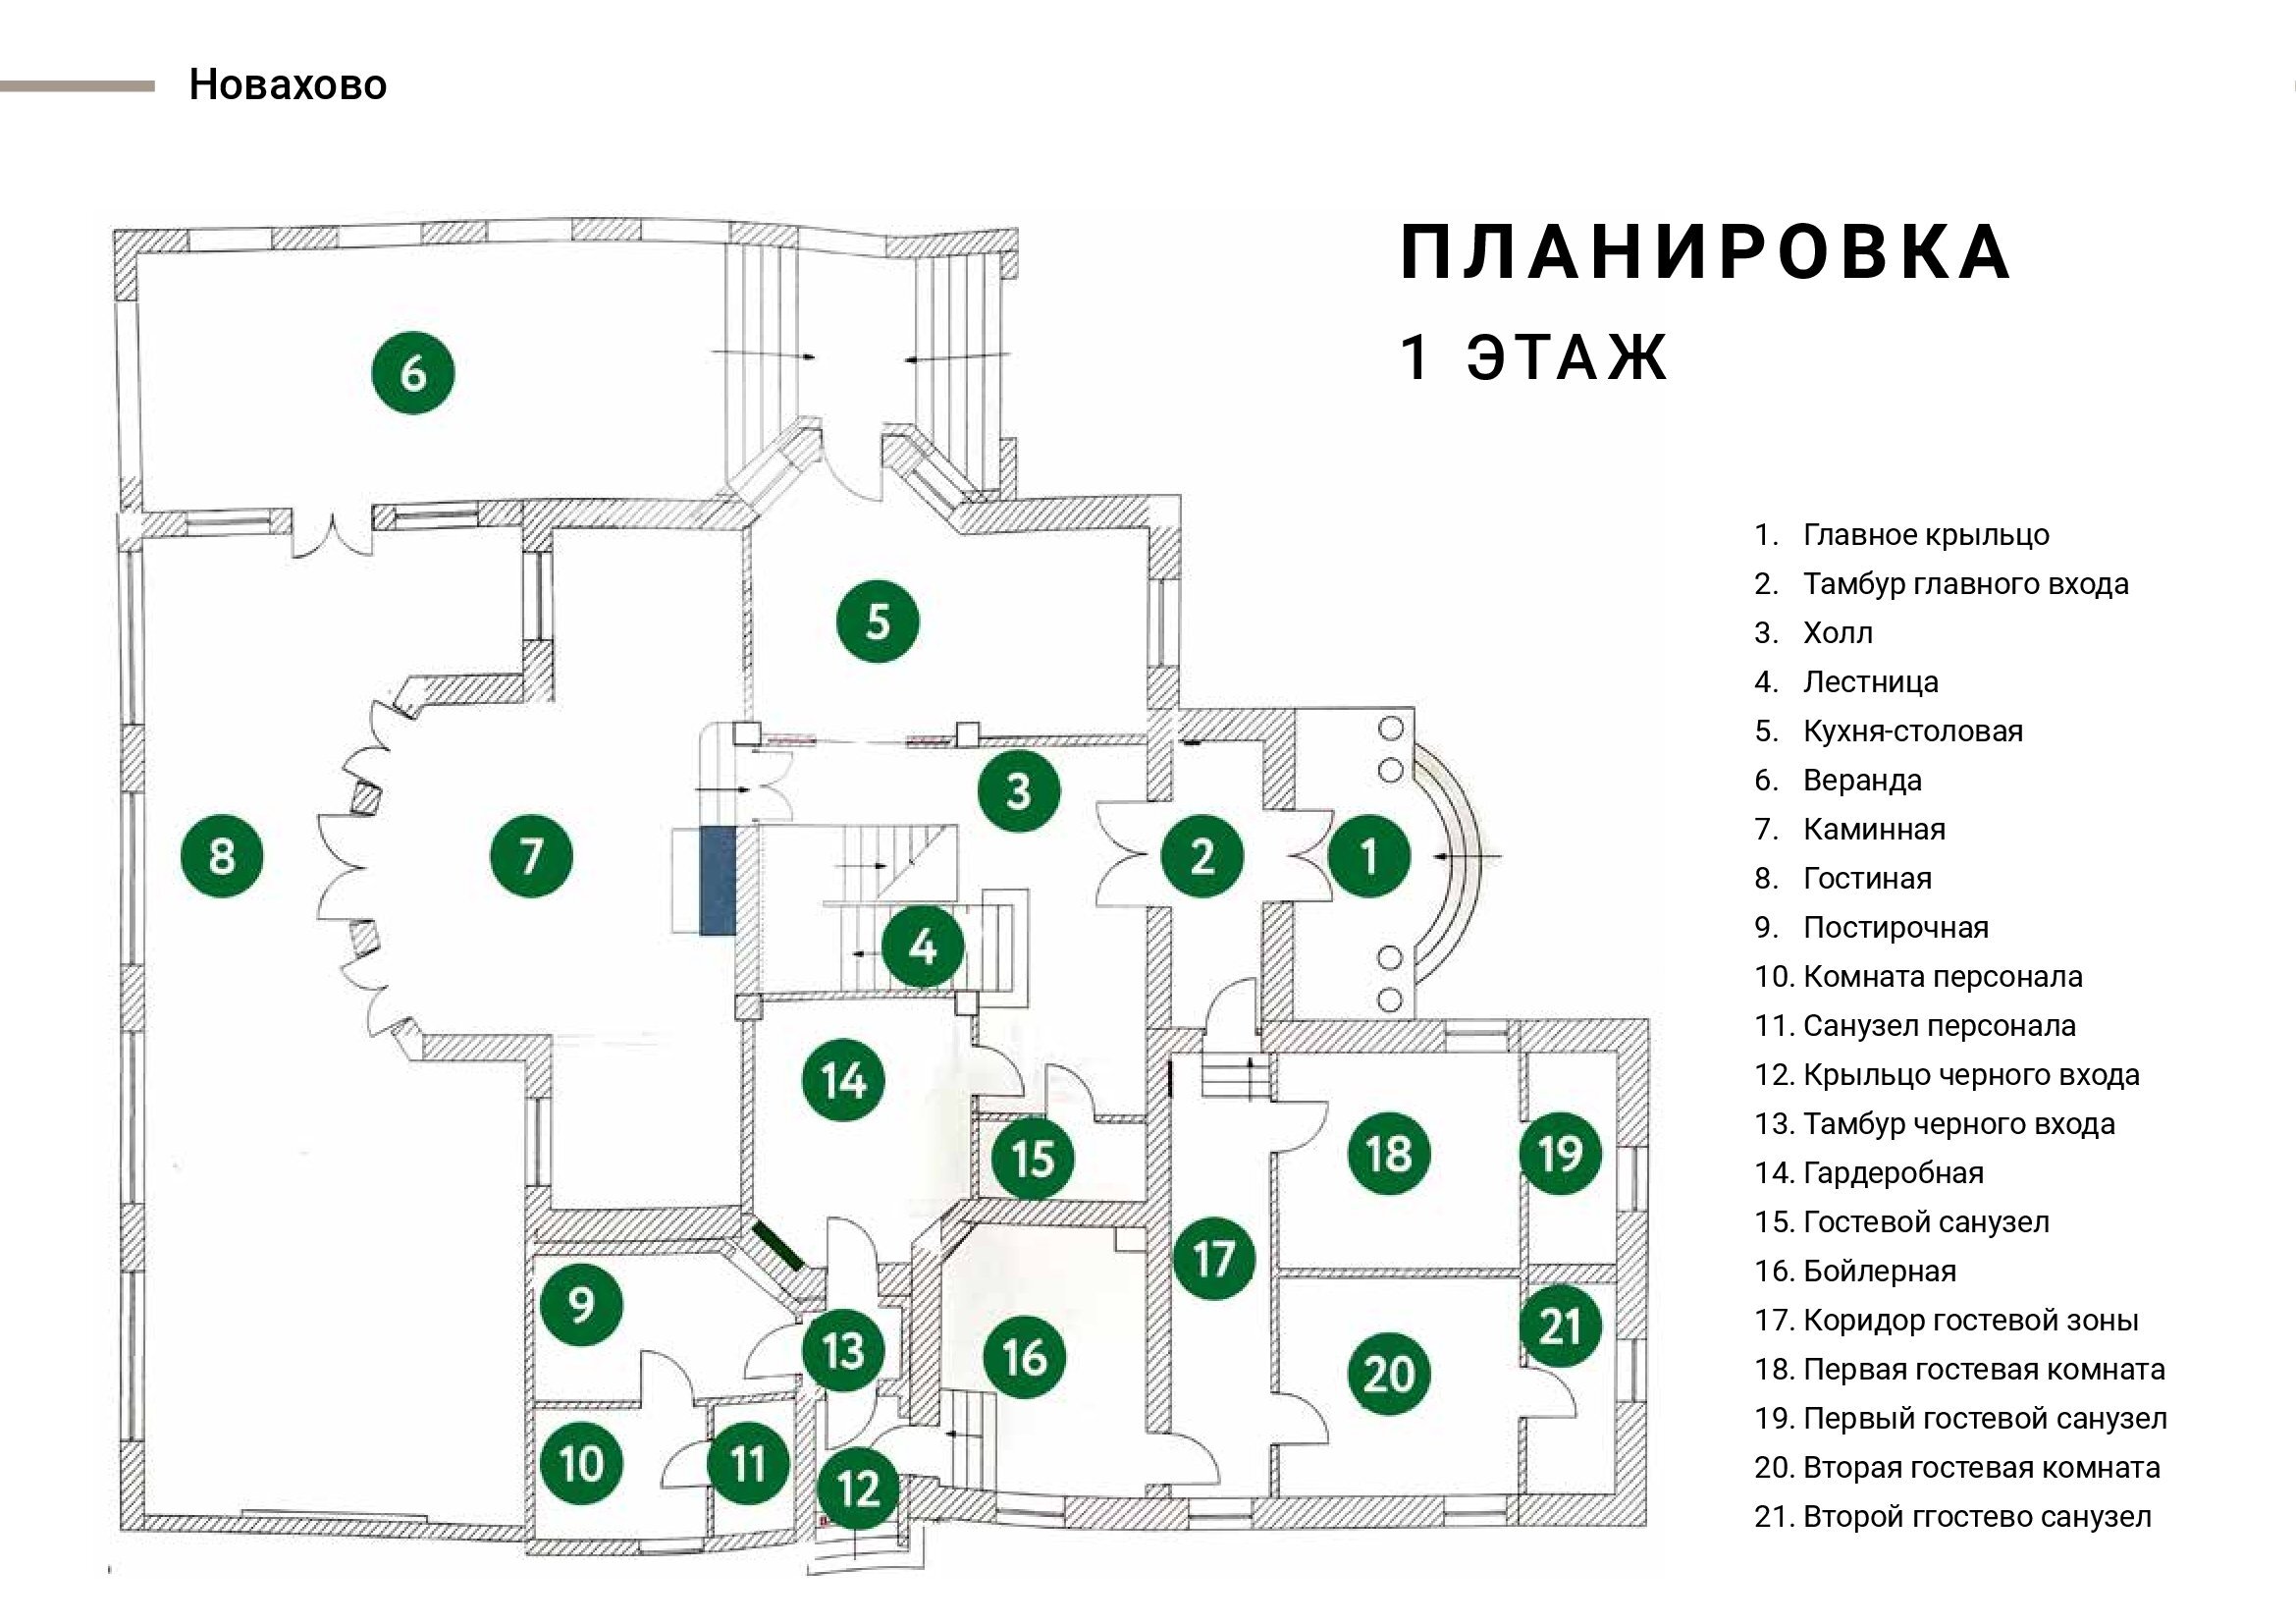 Новахово: дом площадью 750 кв.м на участке 18 сот. | ID 32331